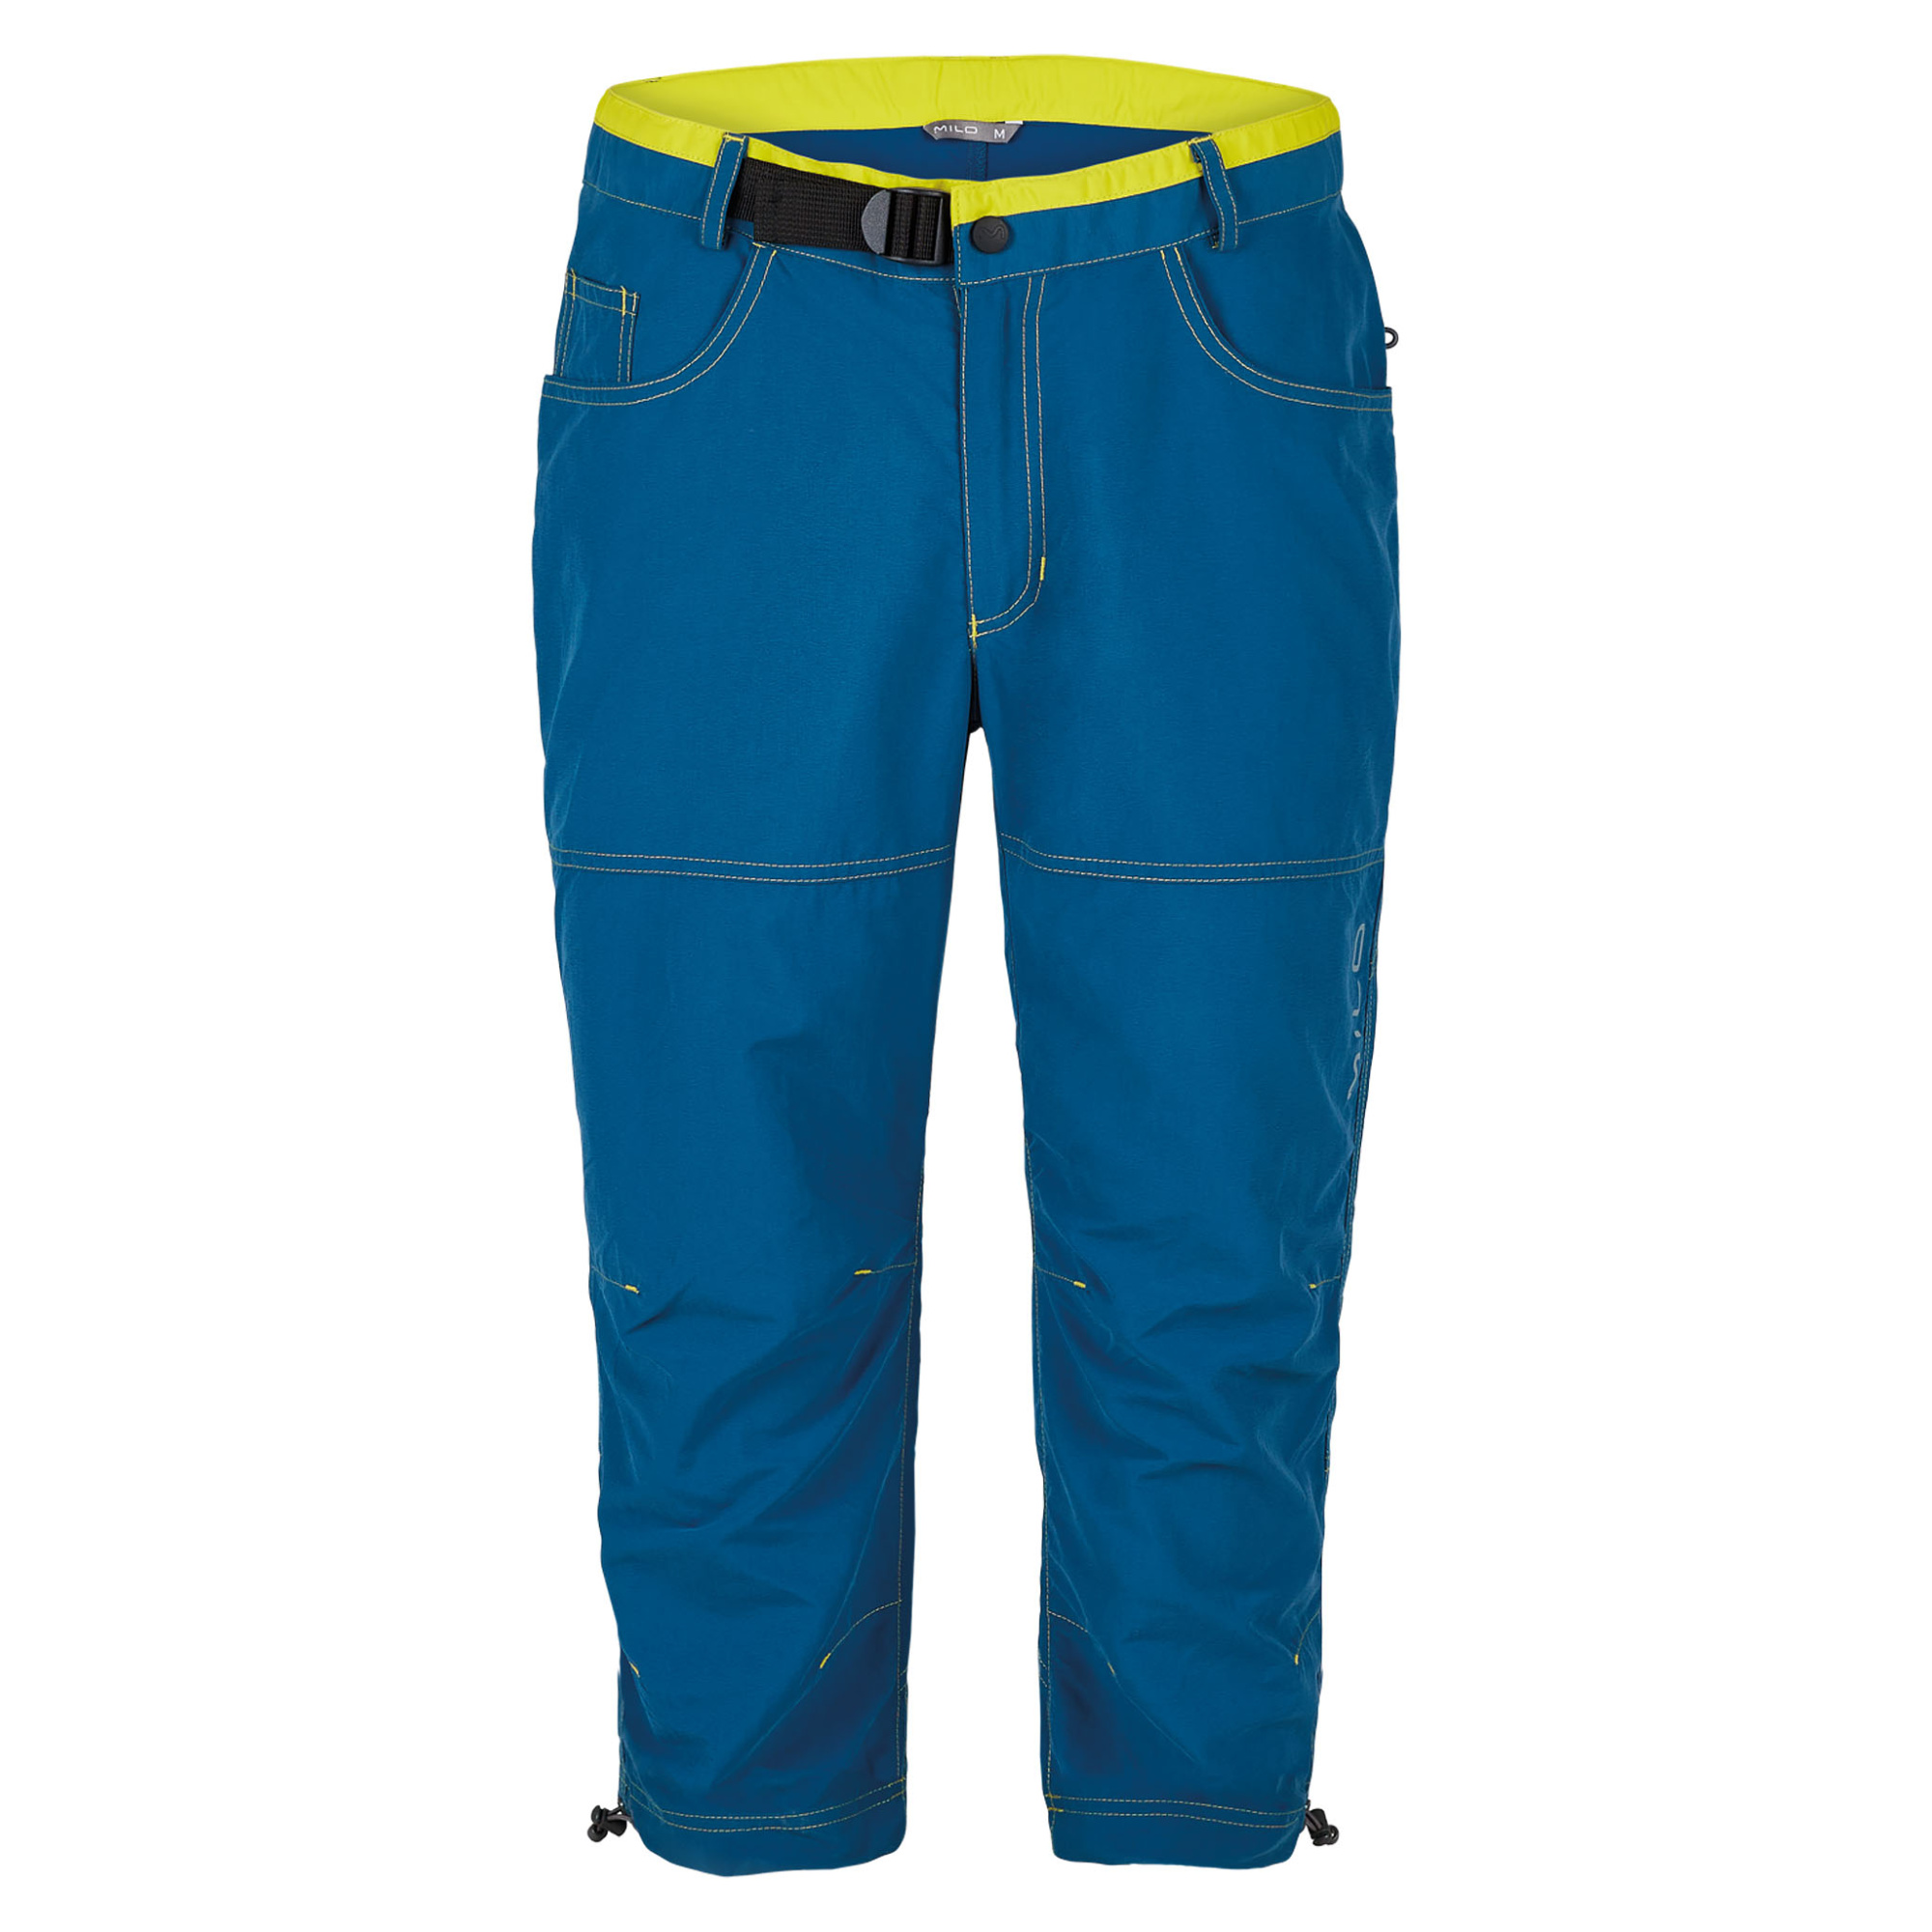 Pánske lezecké nohavice Jote 3/4 blue Milo M